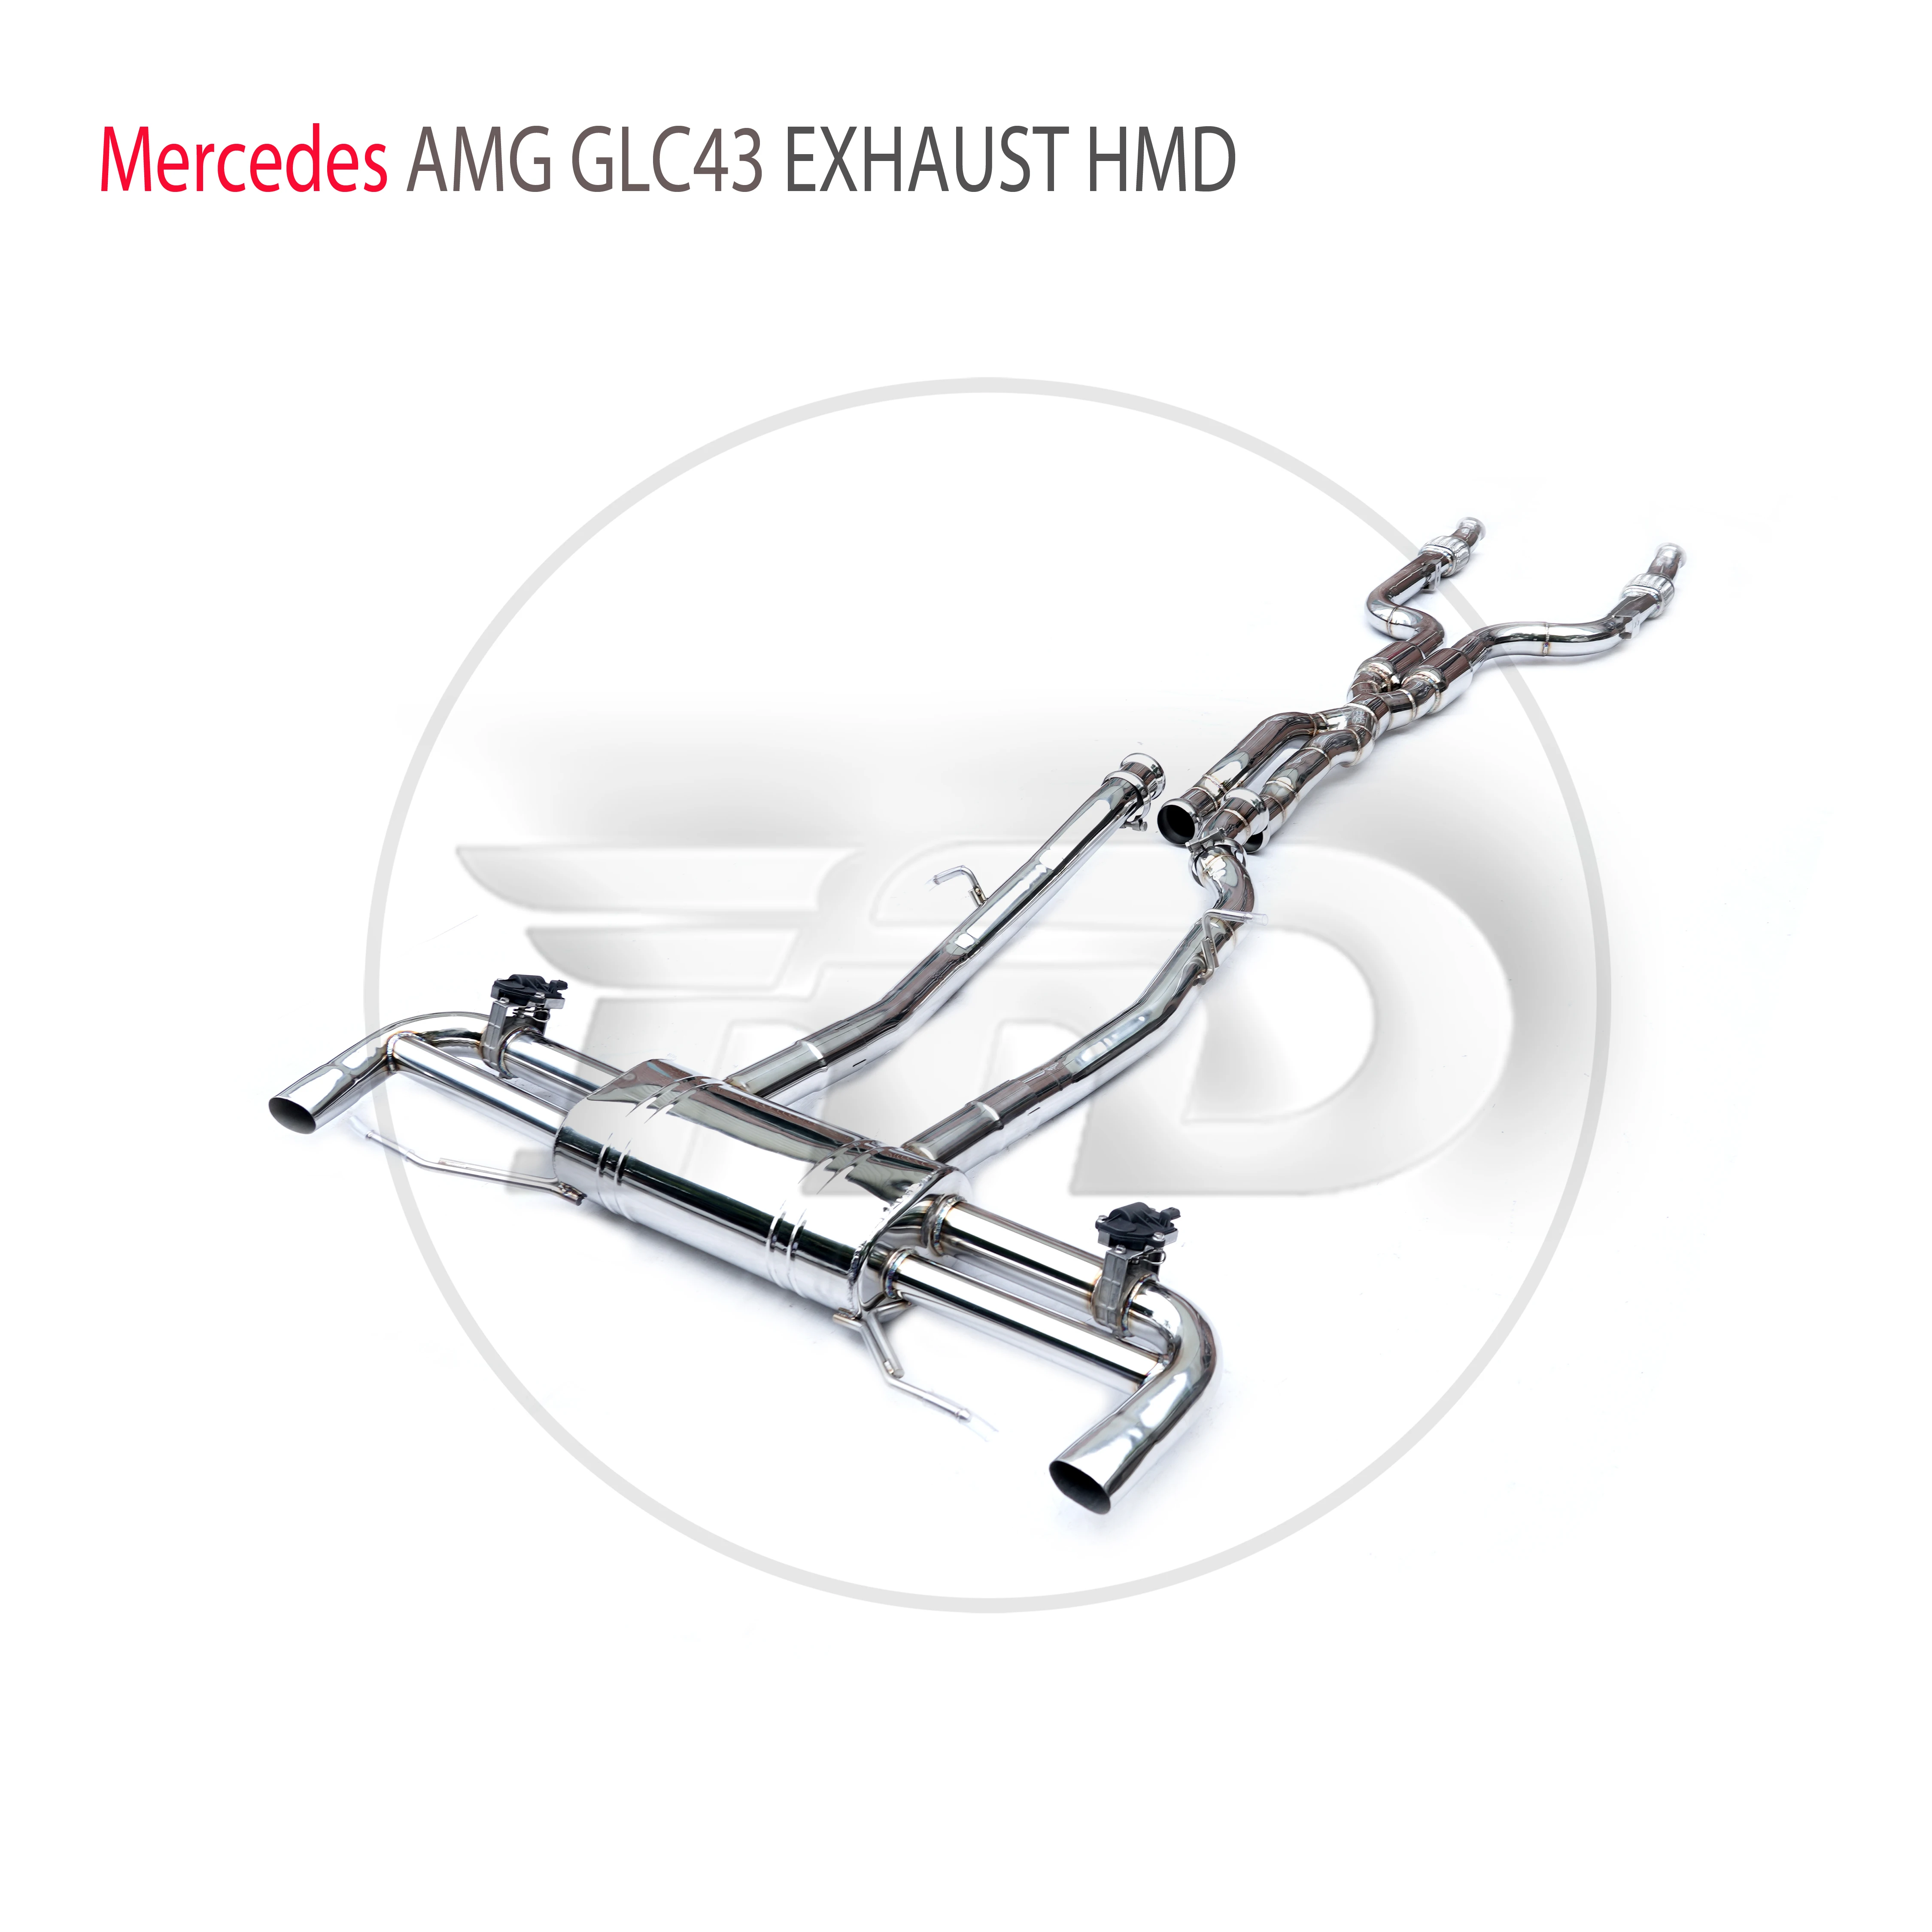 

HMD Stainless Steel Exhaust System Performance Catback for Mercedes Benz AMG GLC43 3.0T Valve Muffler